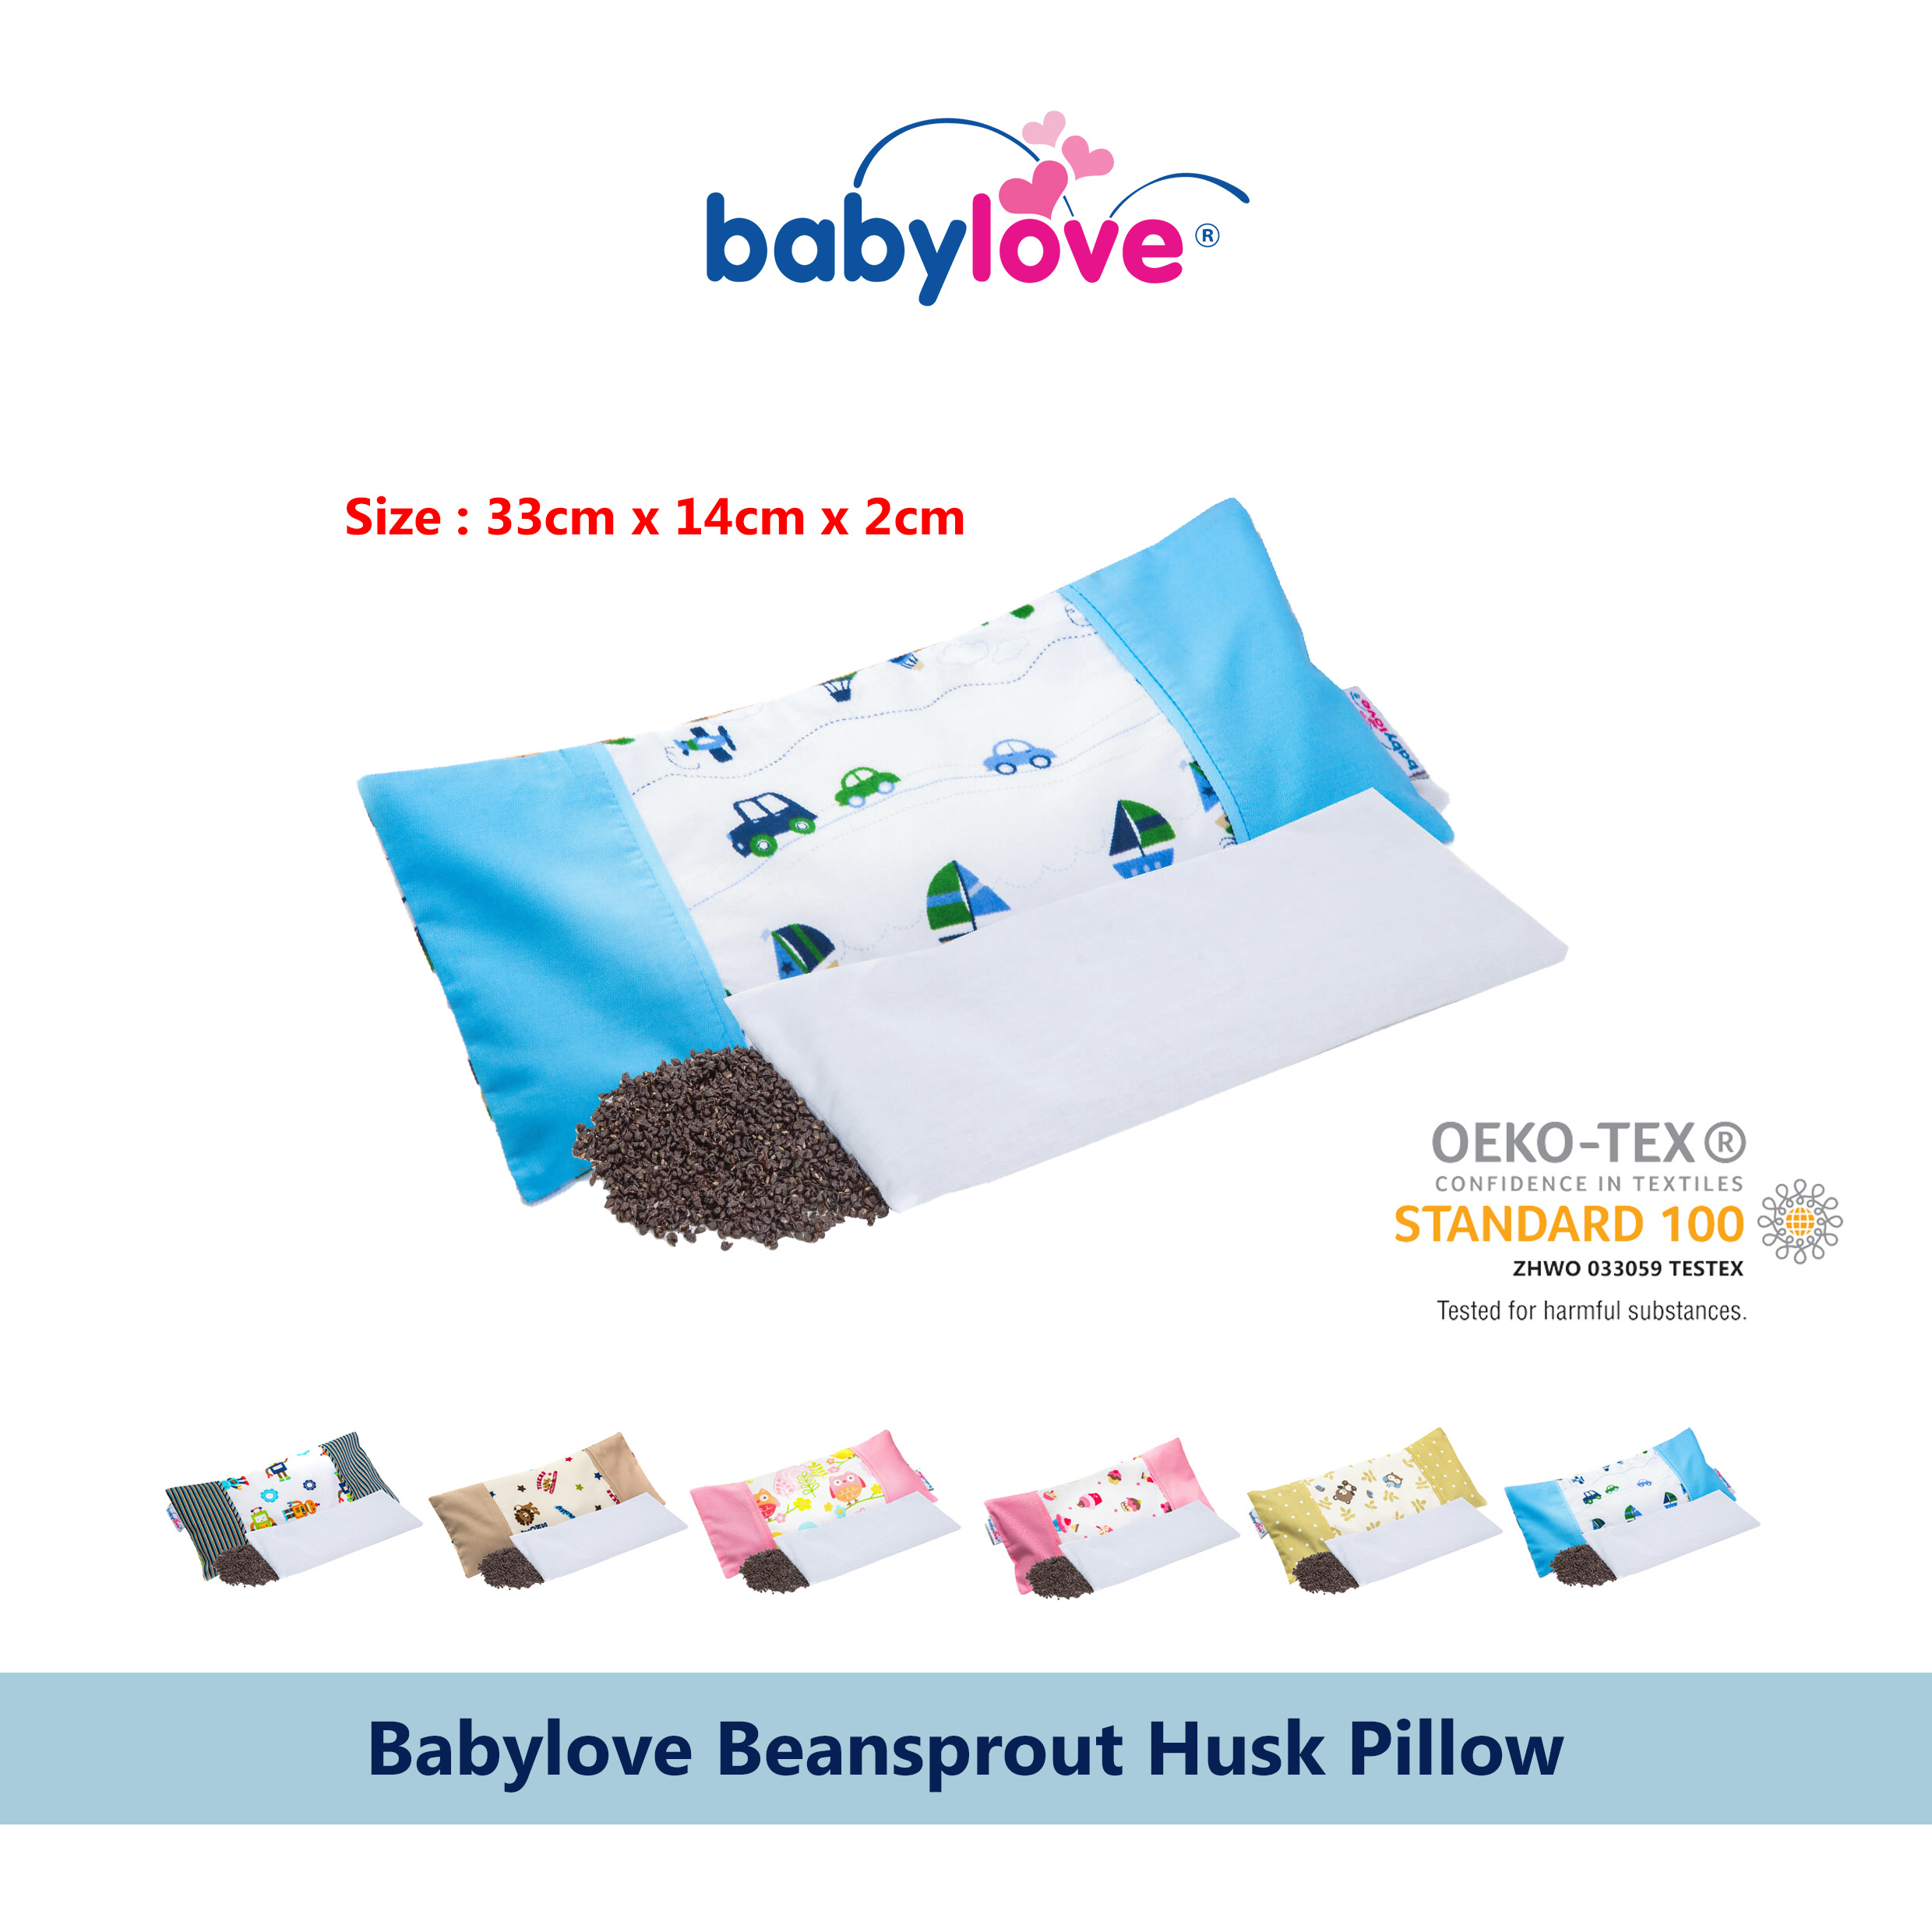 Babylove Baby Organic Bean Sprout Husk Pillow with Pillowcase + PWP $1 Baby Organic Beansprout Cover